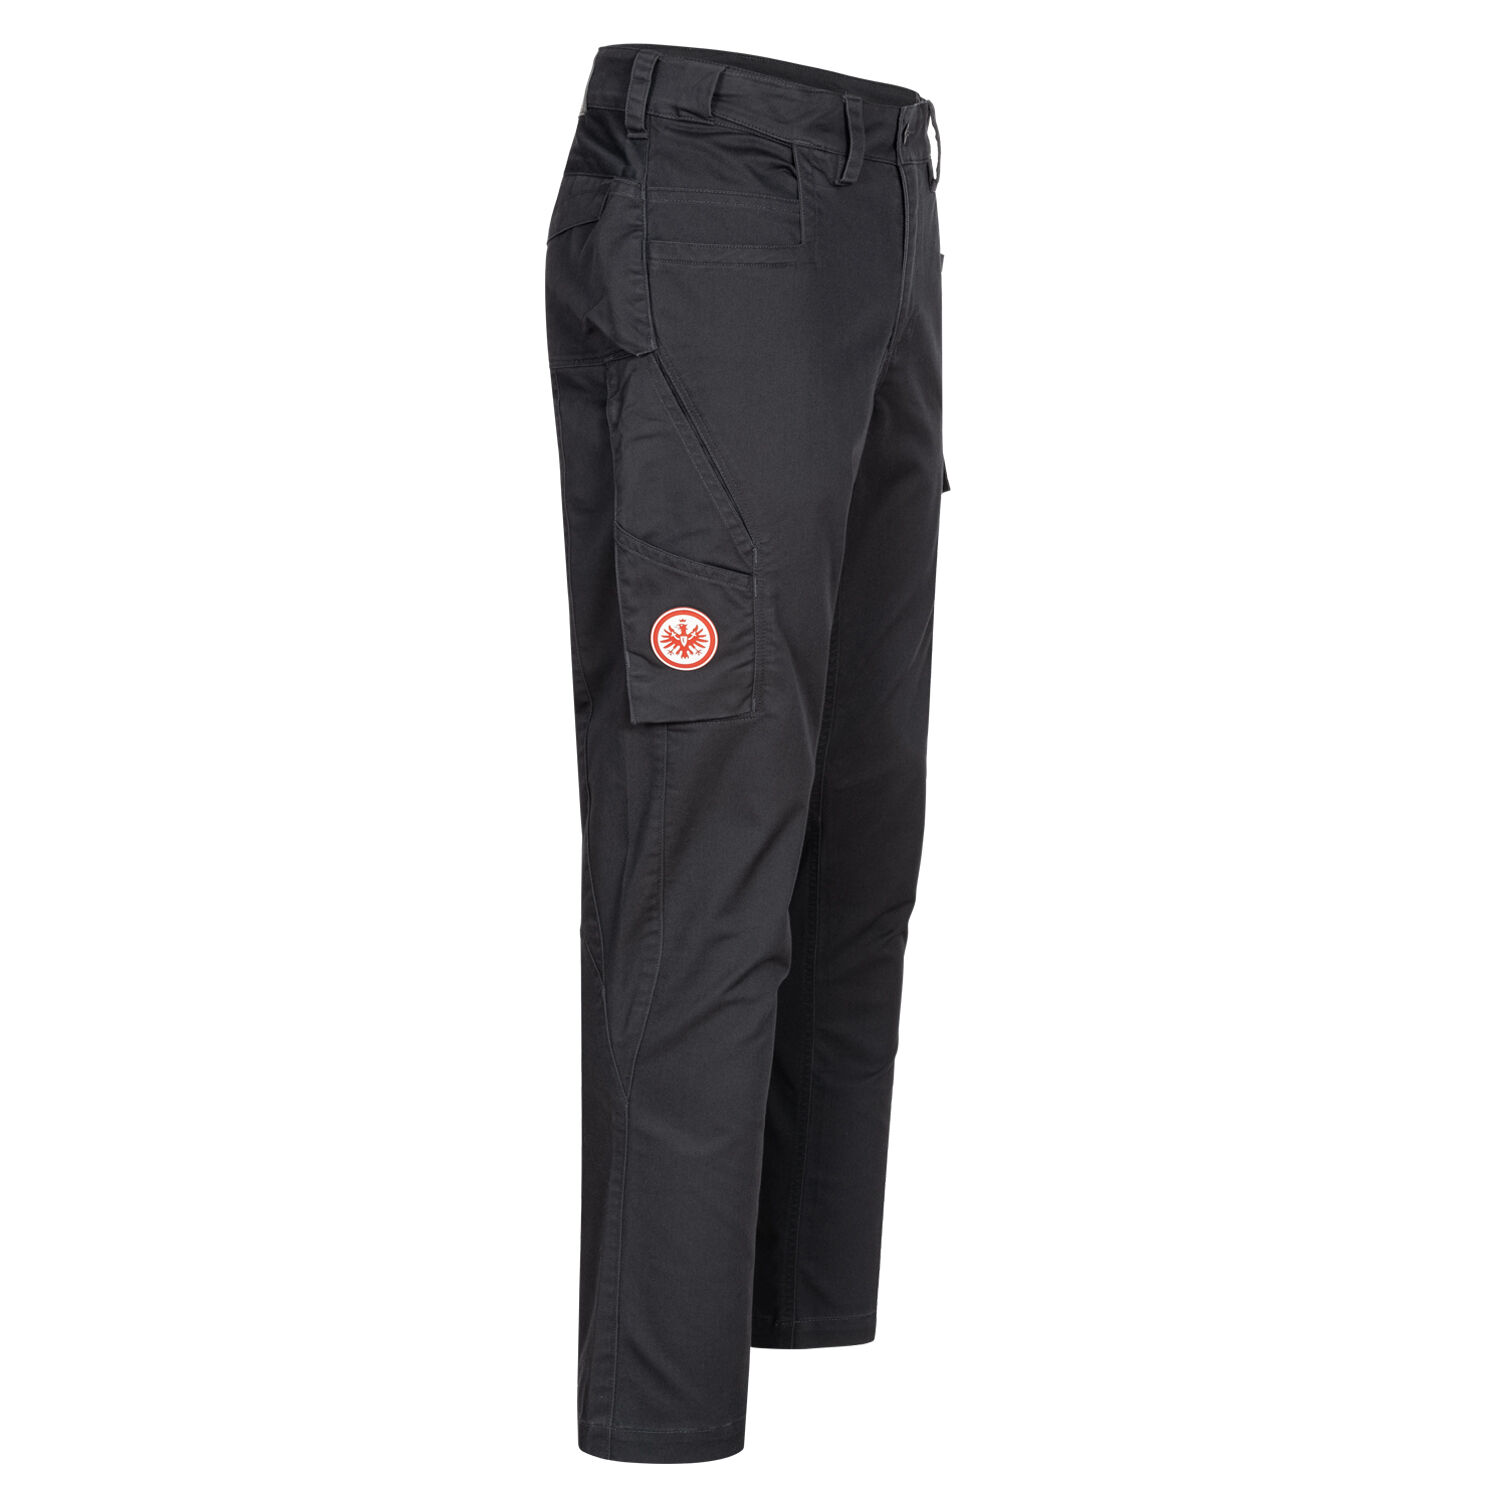 Bild 4: Workwear Pants Long Anthracite